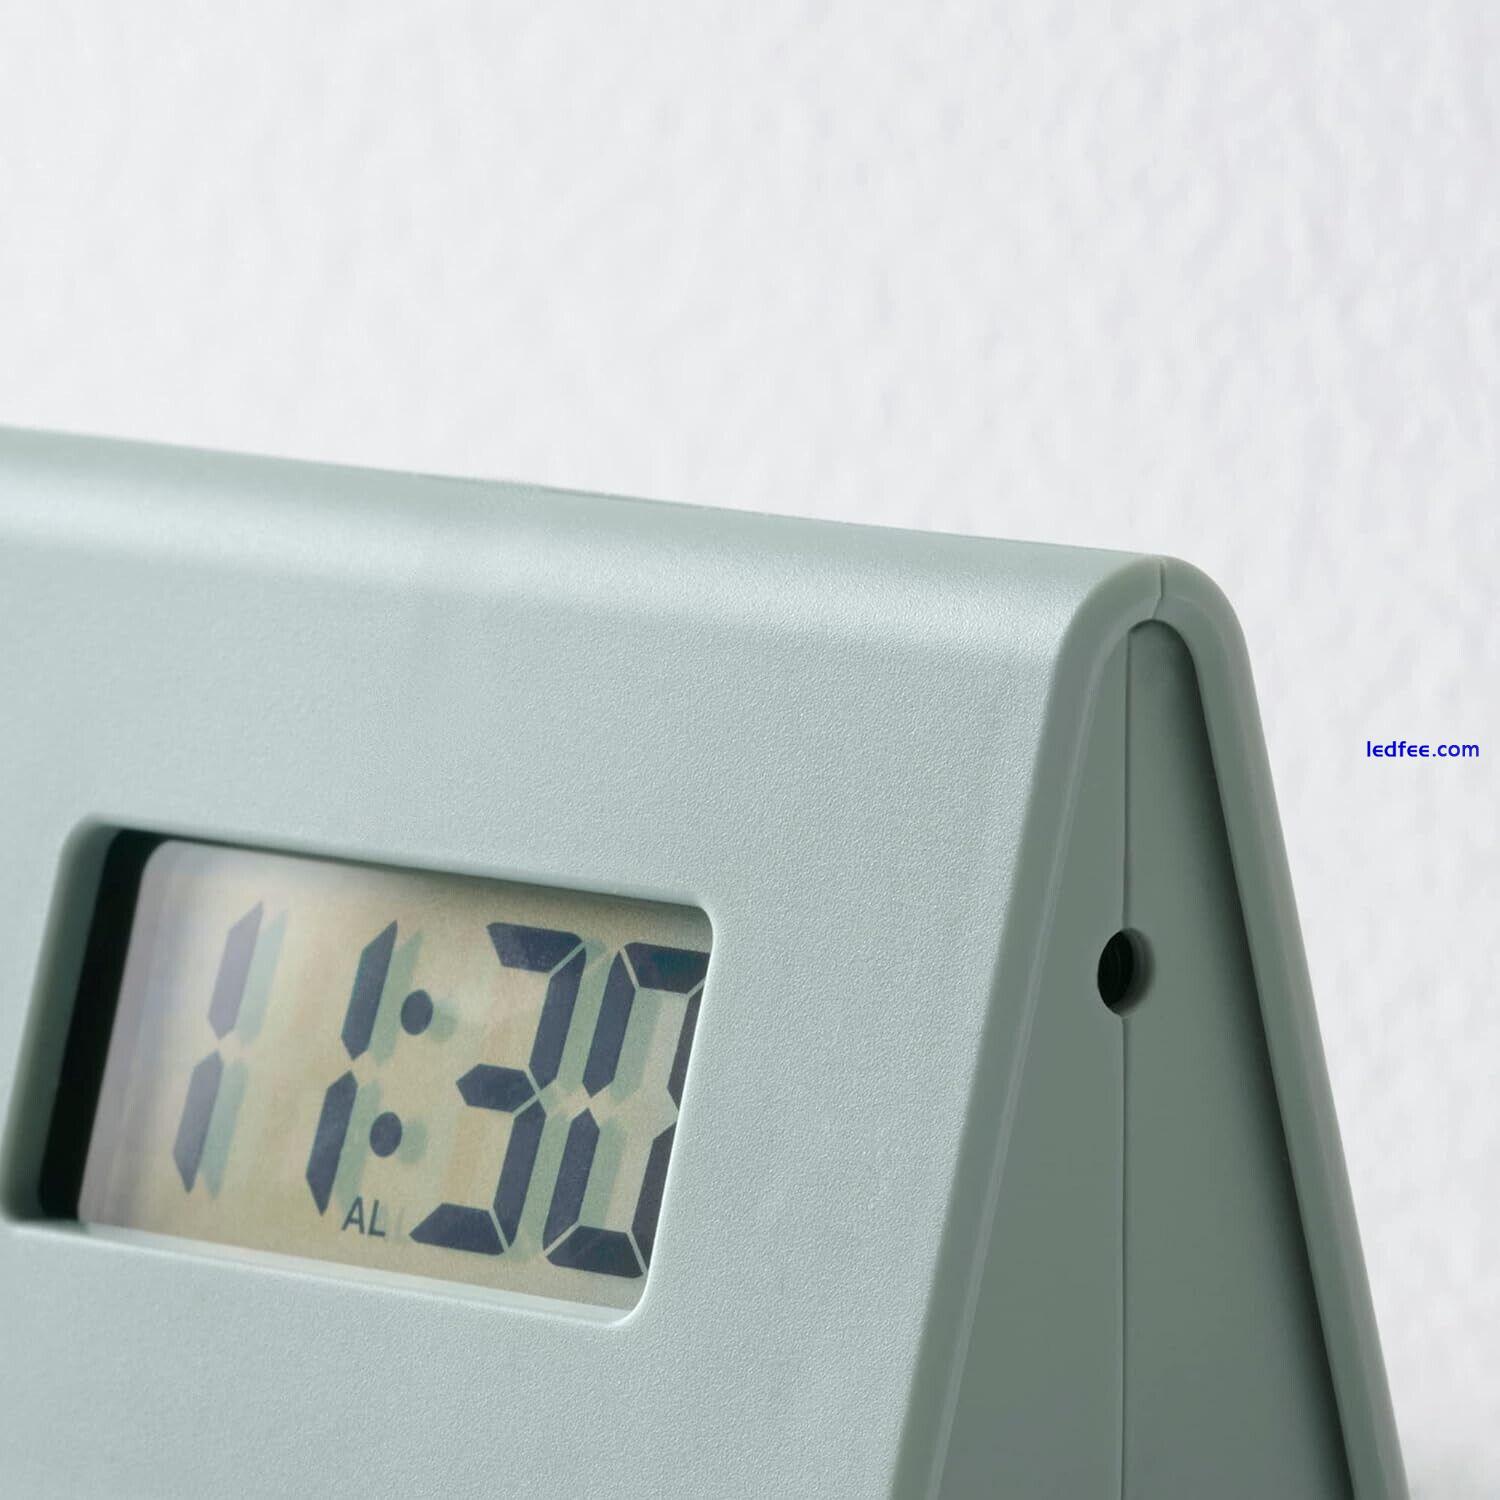 Digital Alarm Clock Bedside Snooze LED Display Clocks Wake Up on Time New UK 3 